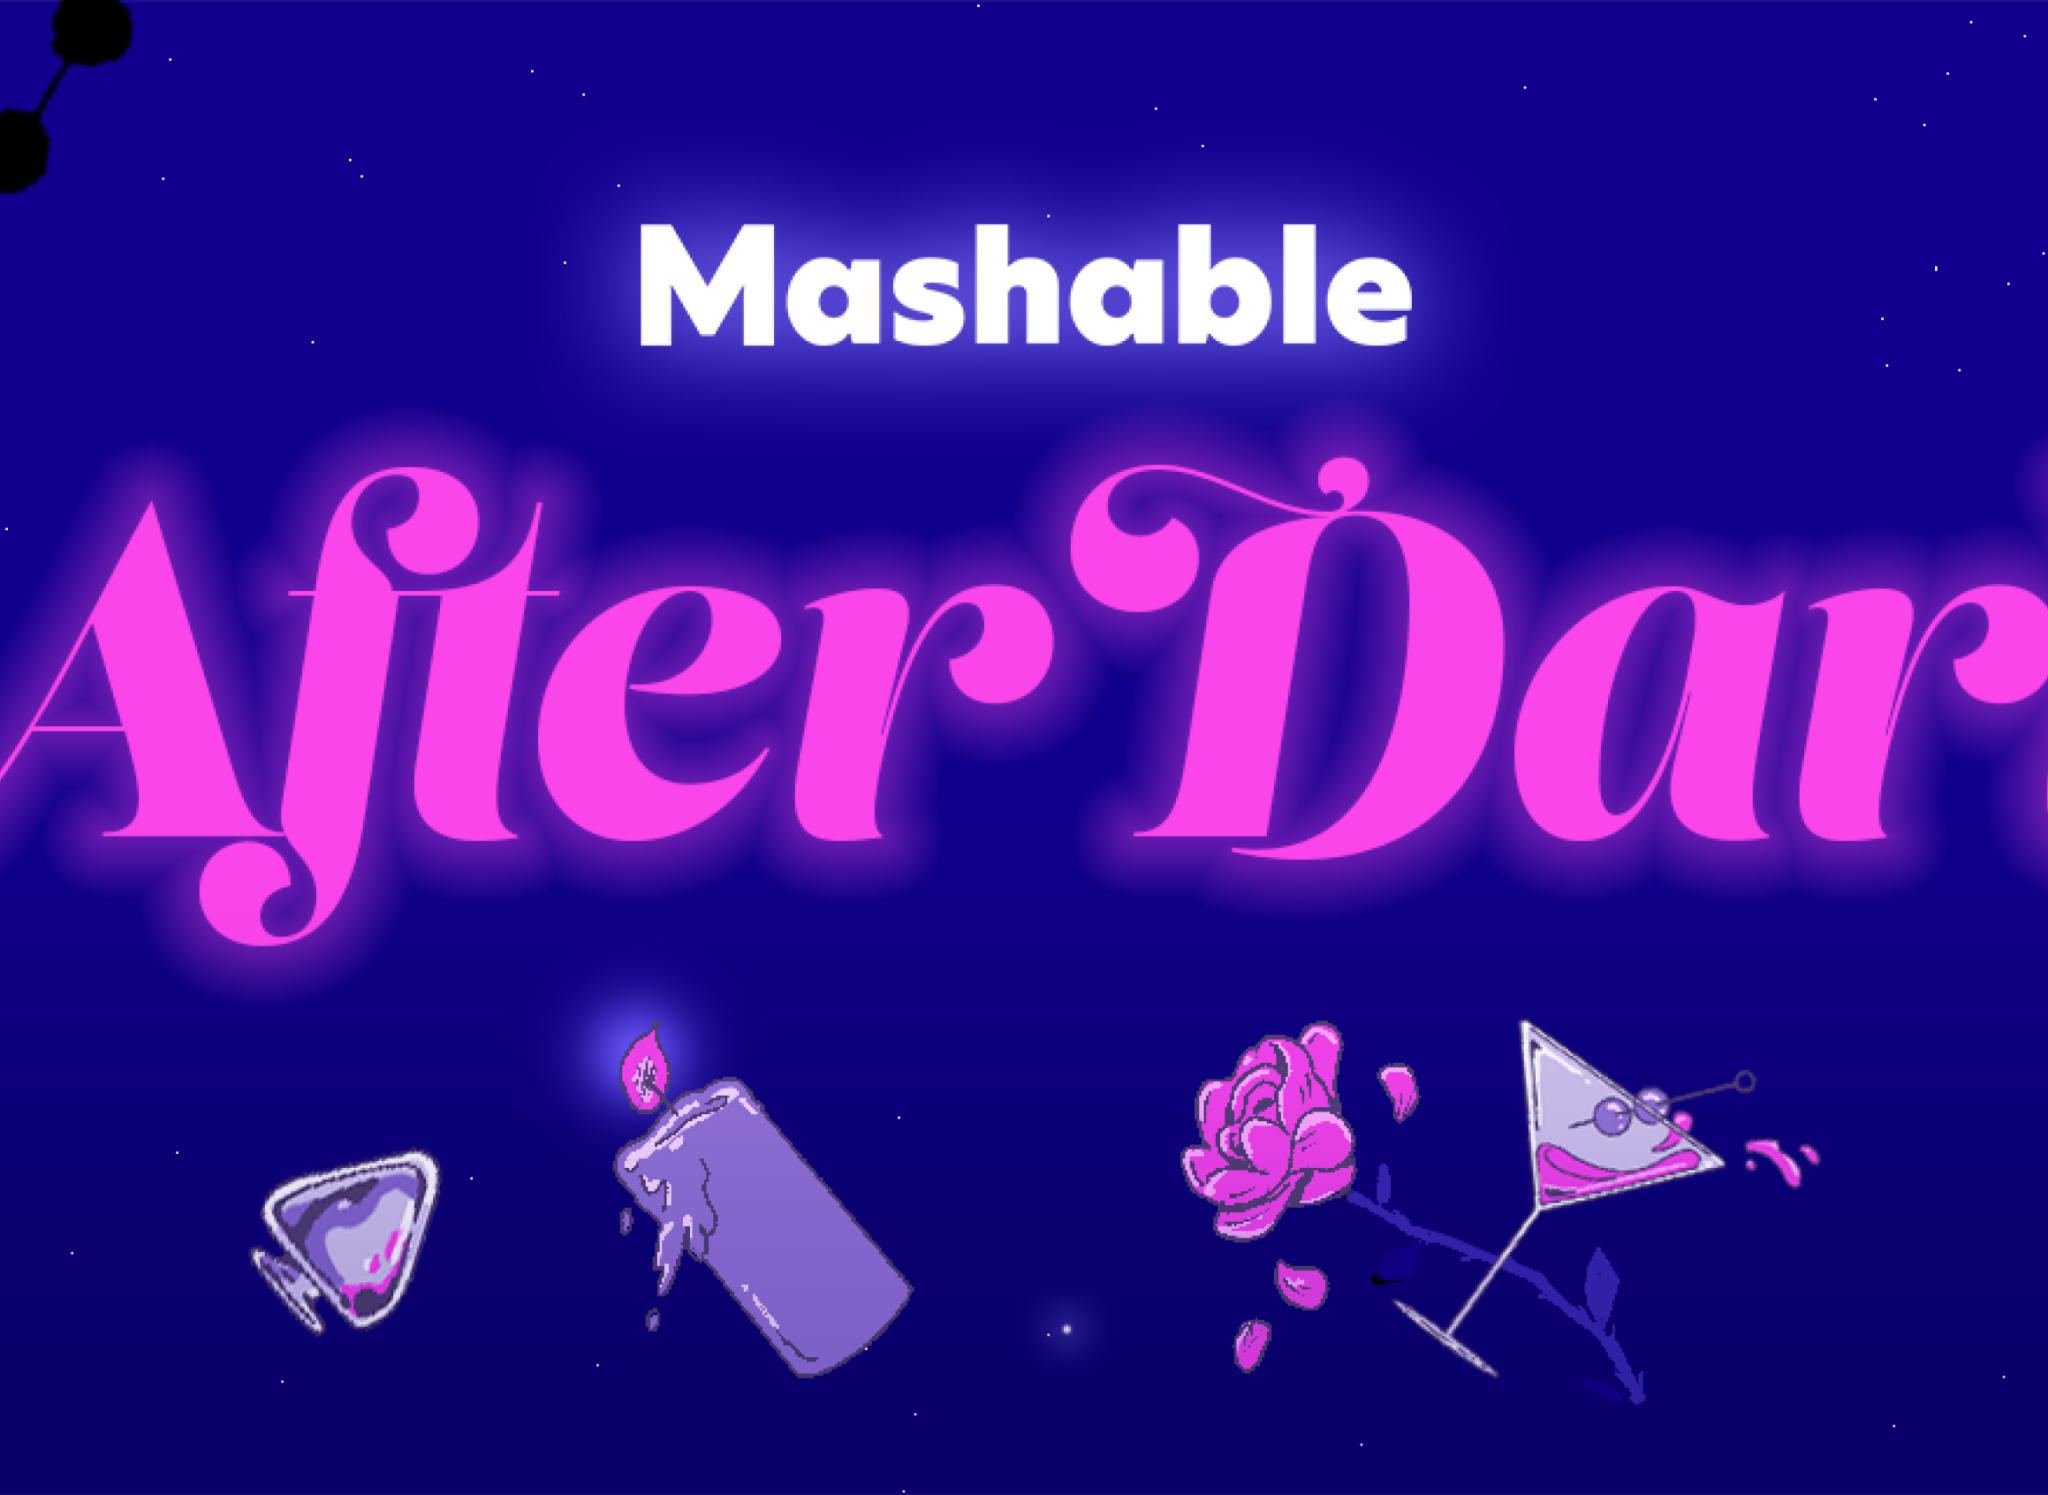 Sign up for Mashable After Dark